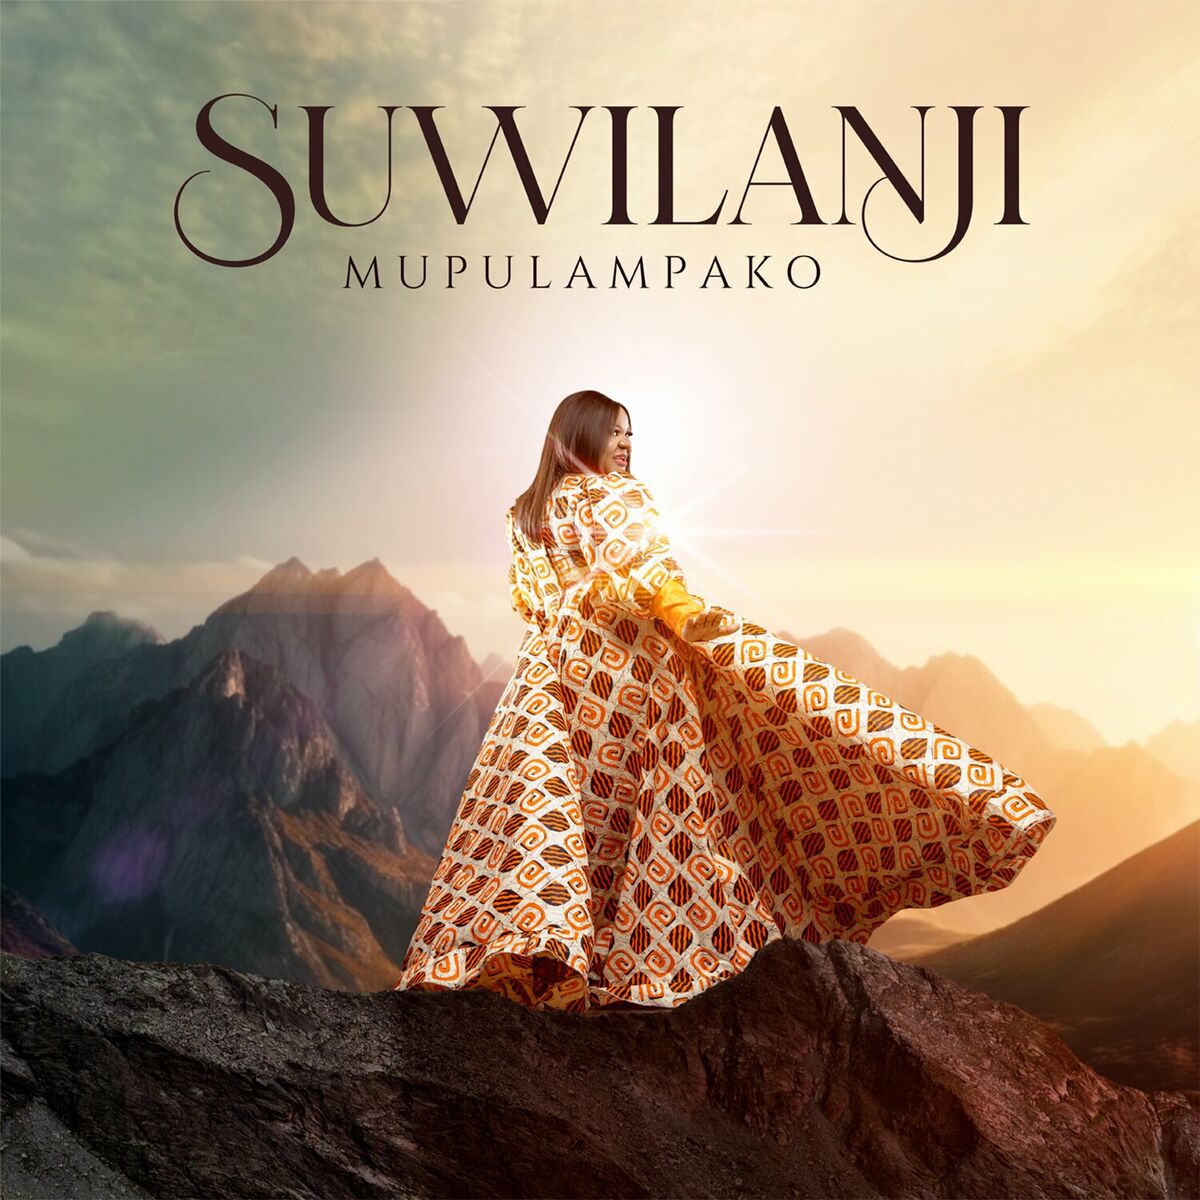 Suwilanji – Mupulampako Album